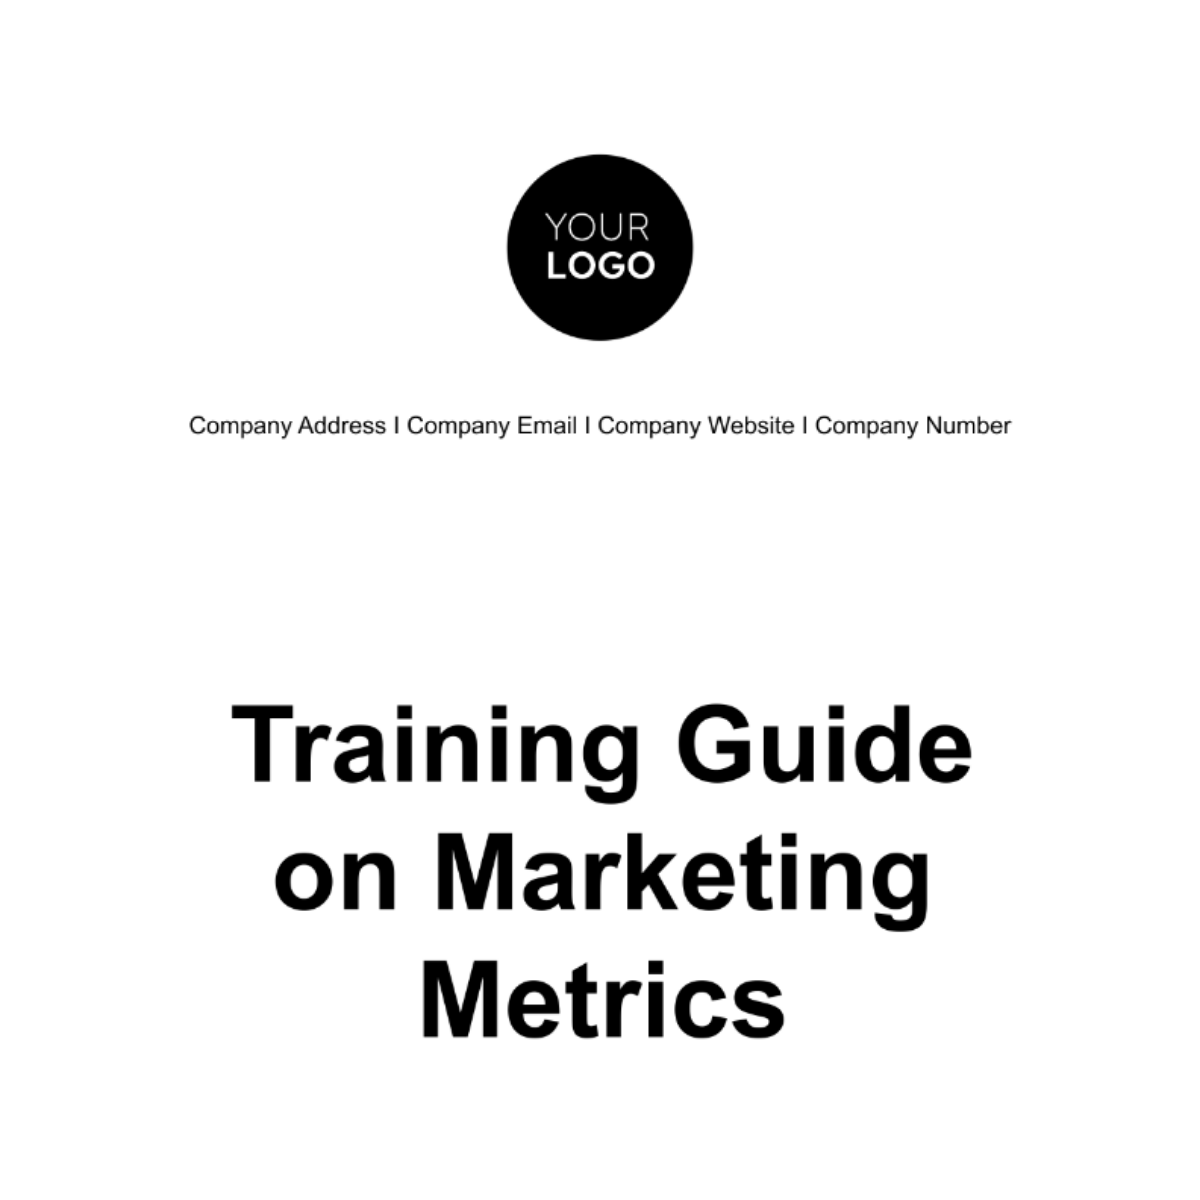 Training Guide on Marketing Metrics Template